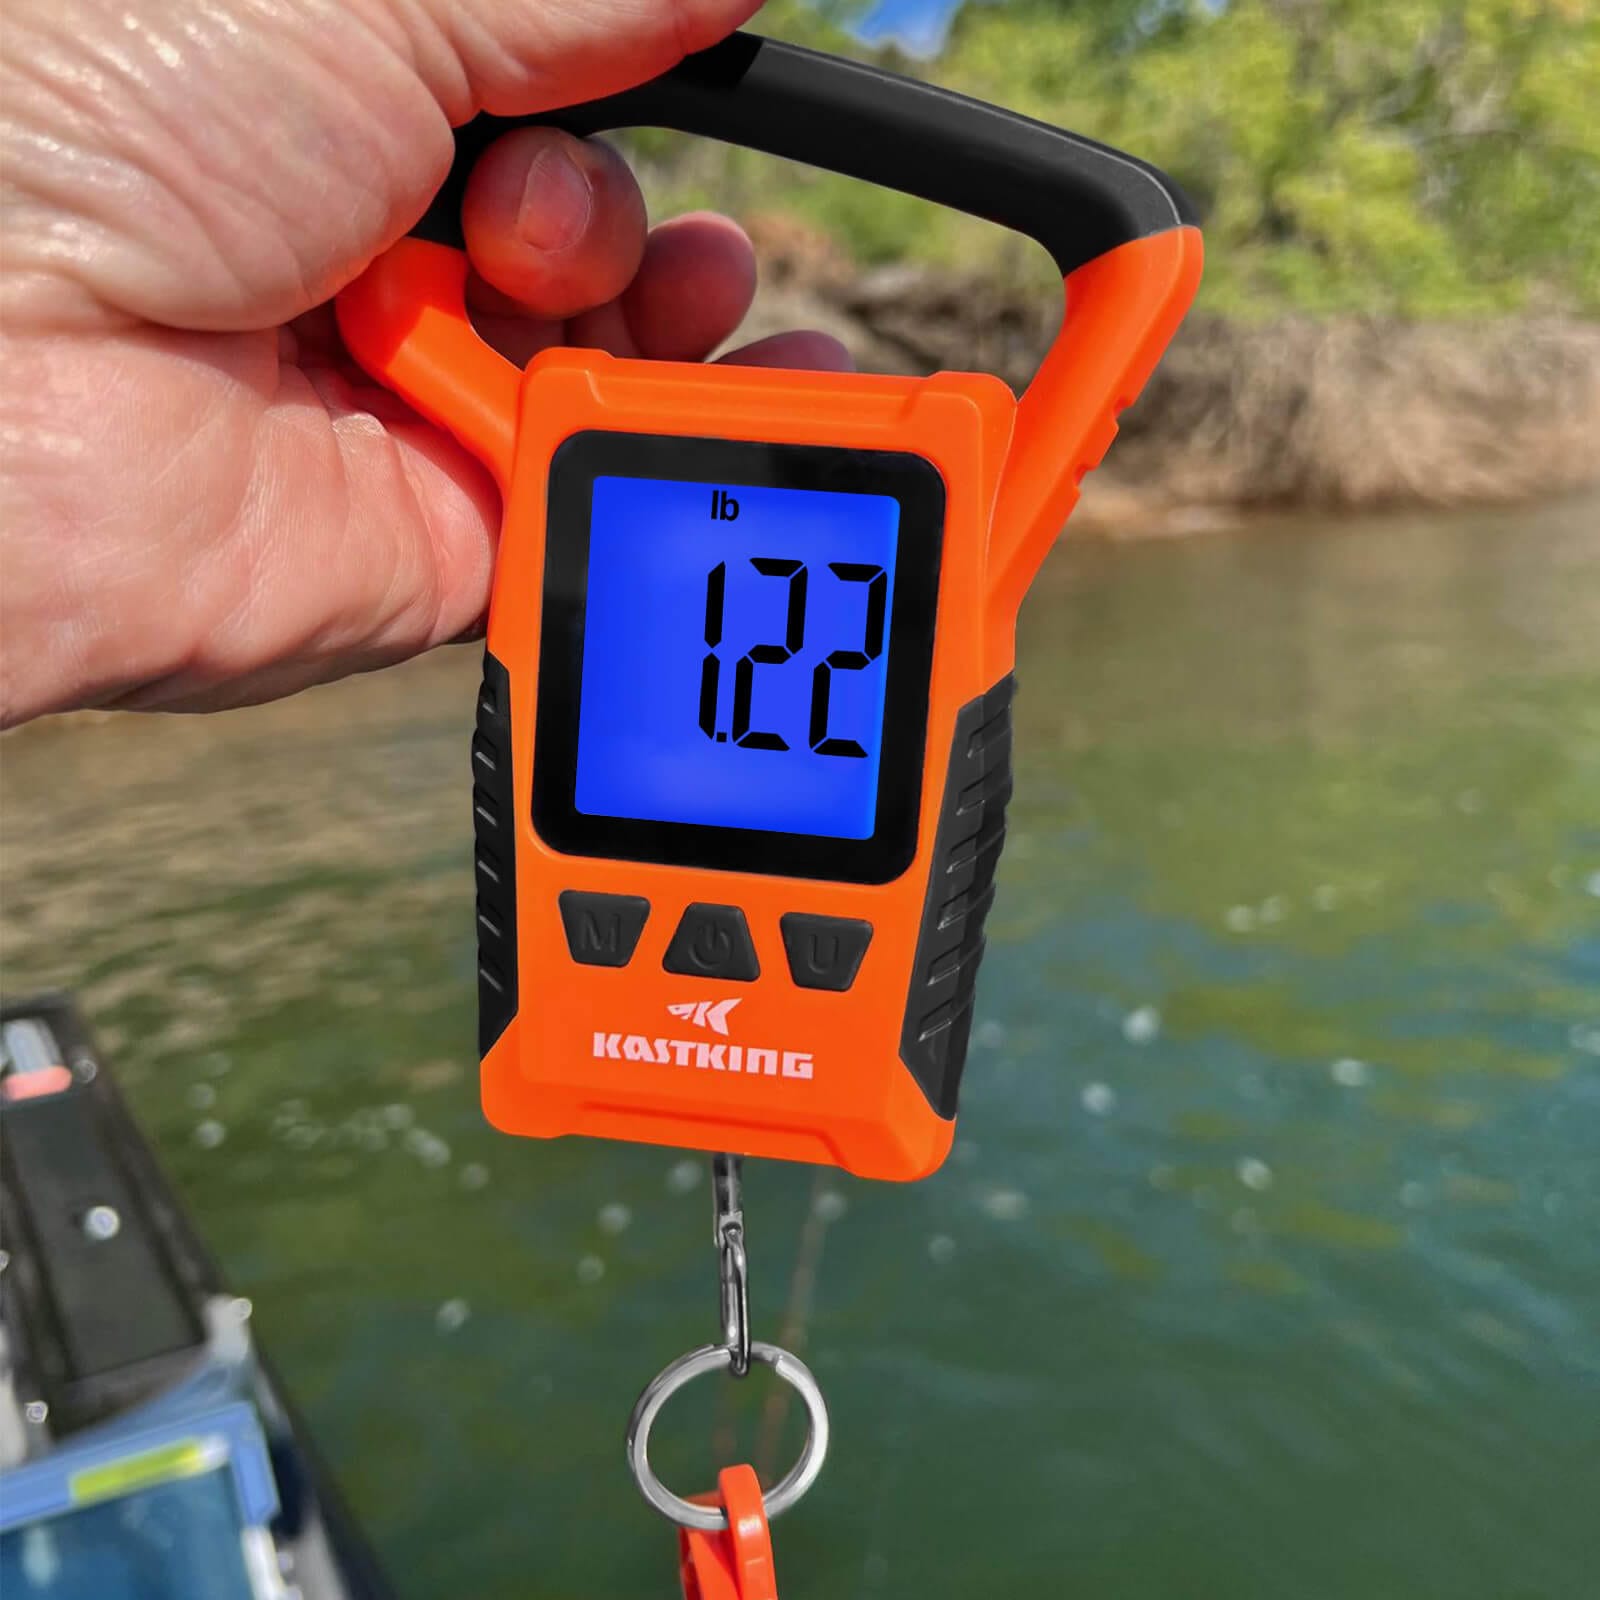 KastKing Fish Scale WideView Floating Waterproof Digital Scale 2.5 Large LCD